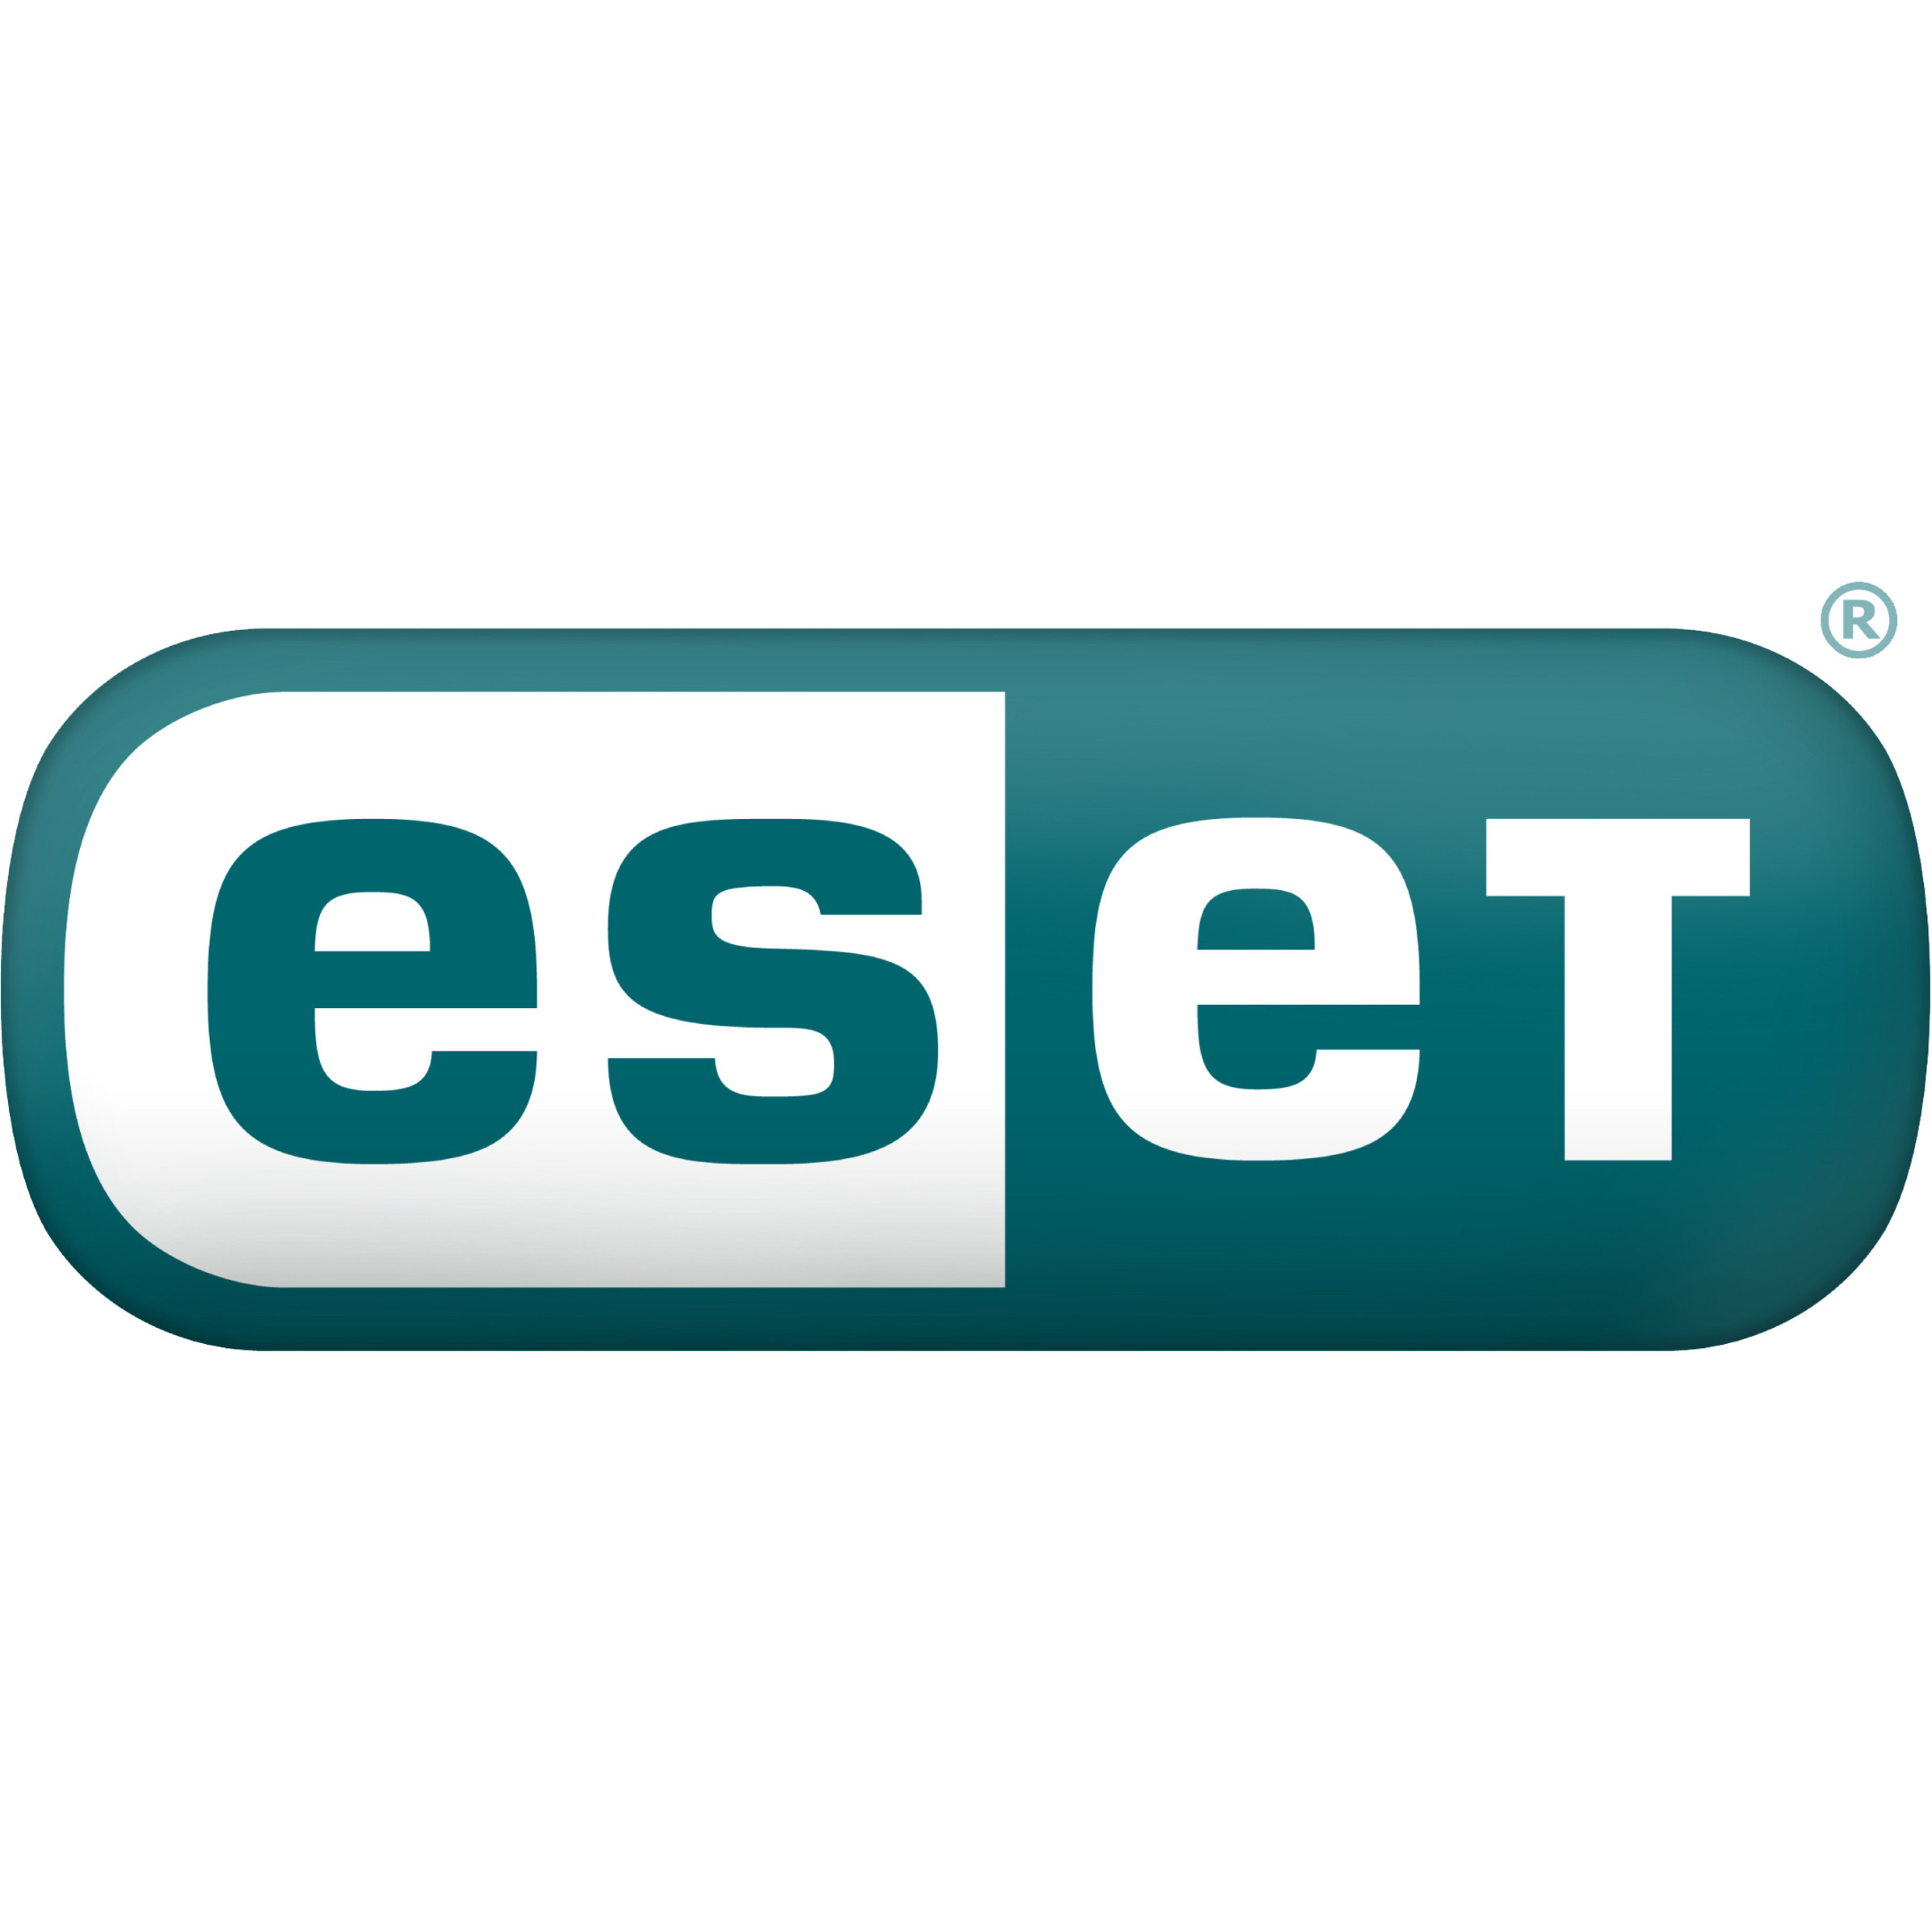 ESET PROTECT Essential PlusSubscription License 1 SeatVolumePC, Mac, Handheld